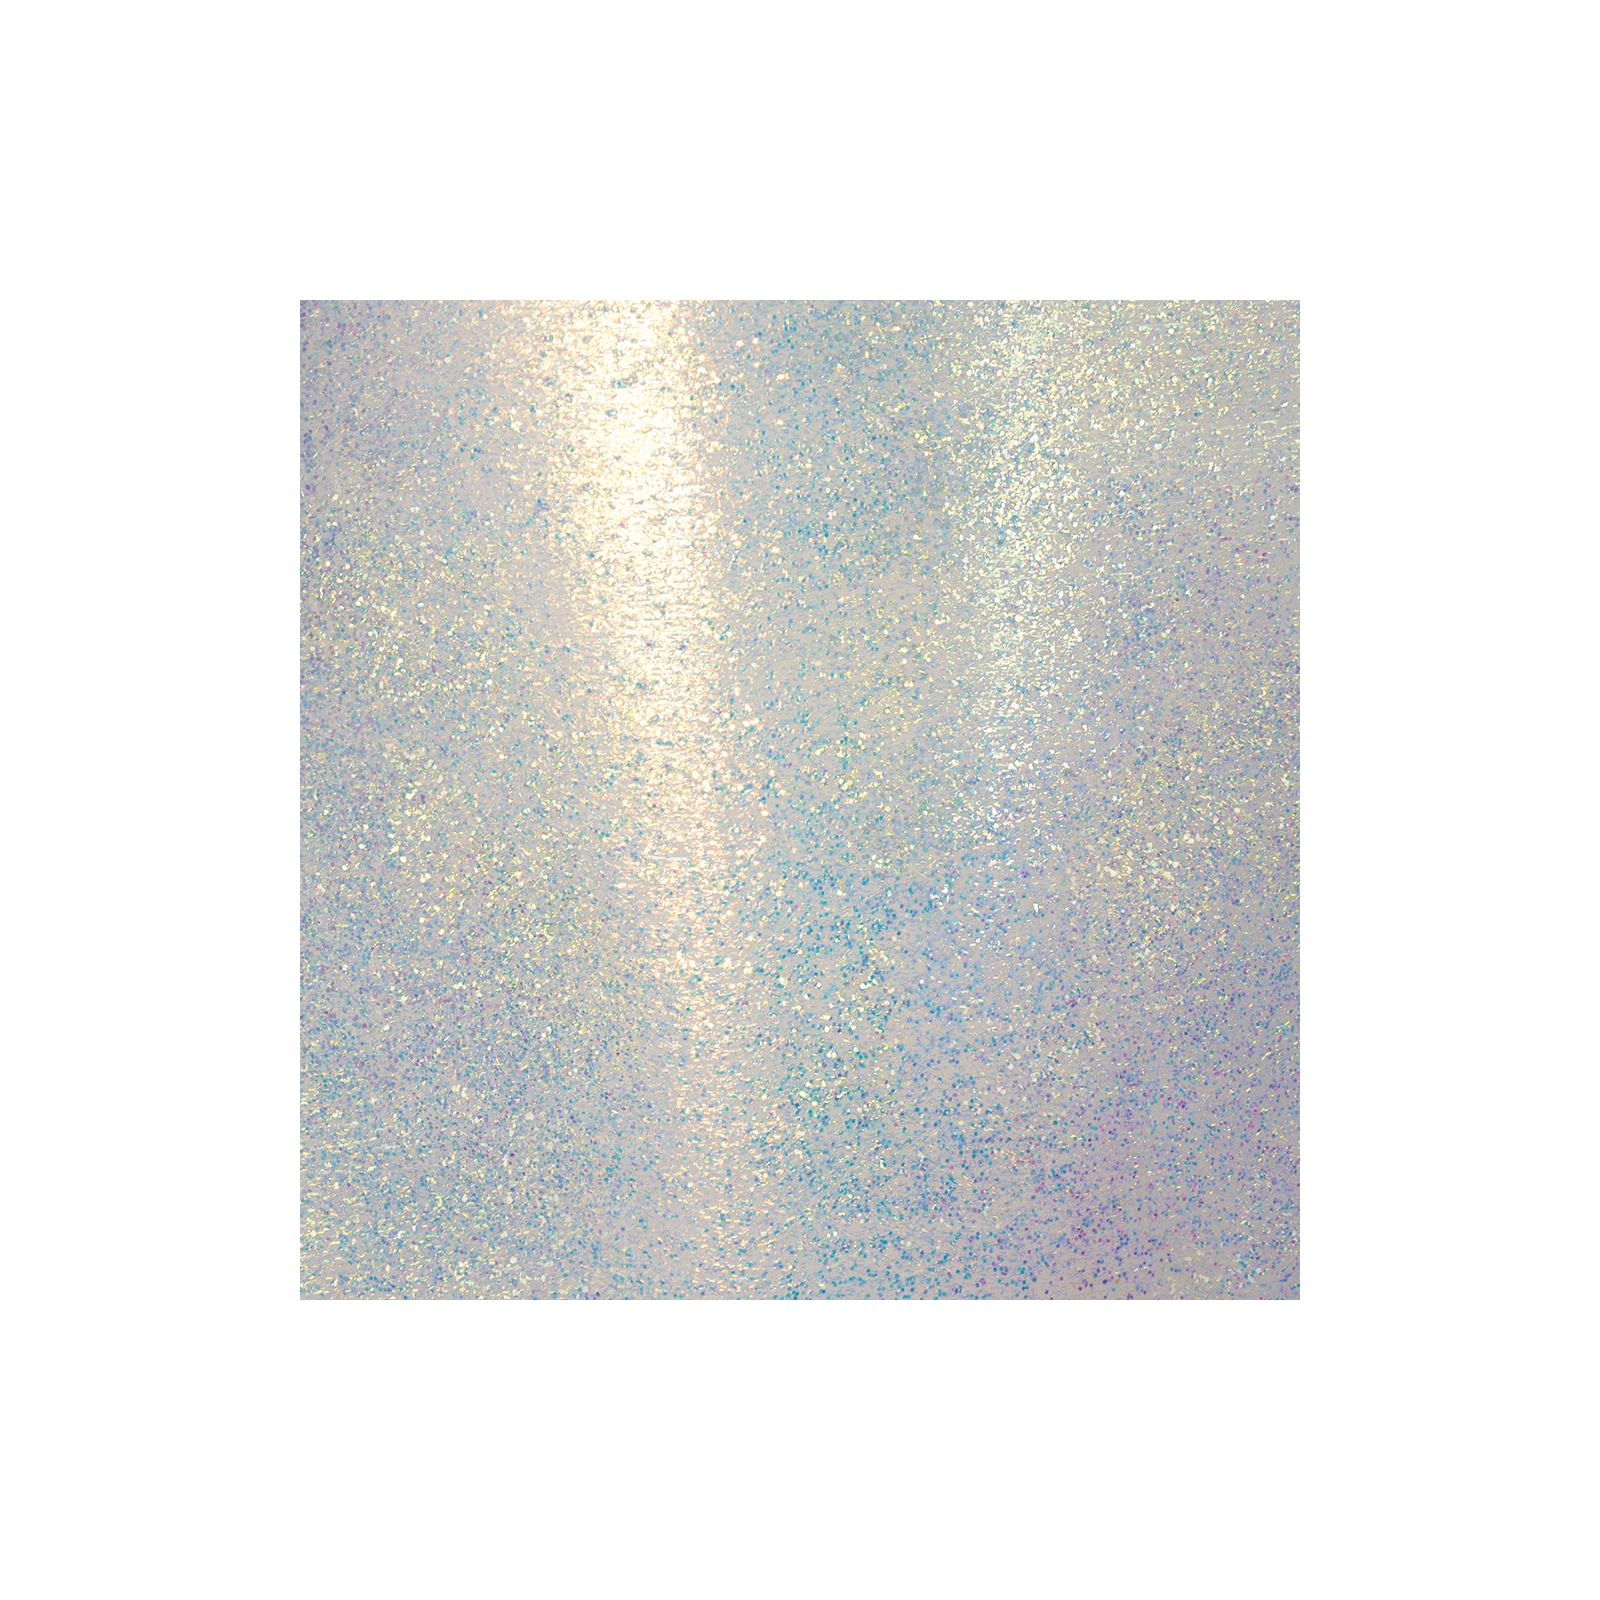 Krylon Iridescent Latex Glitter Paint (1-quart) in the Craft Paint  department at